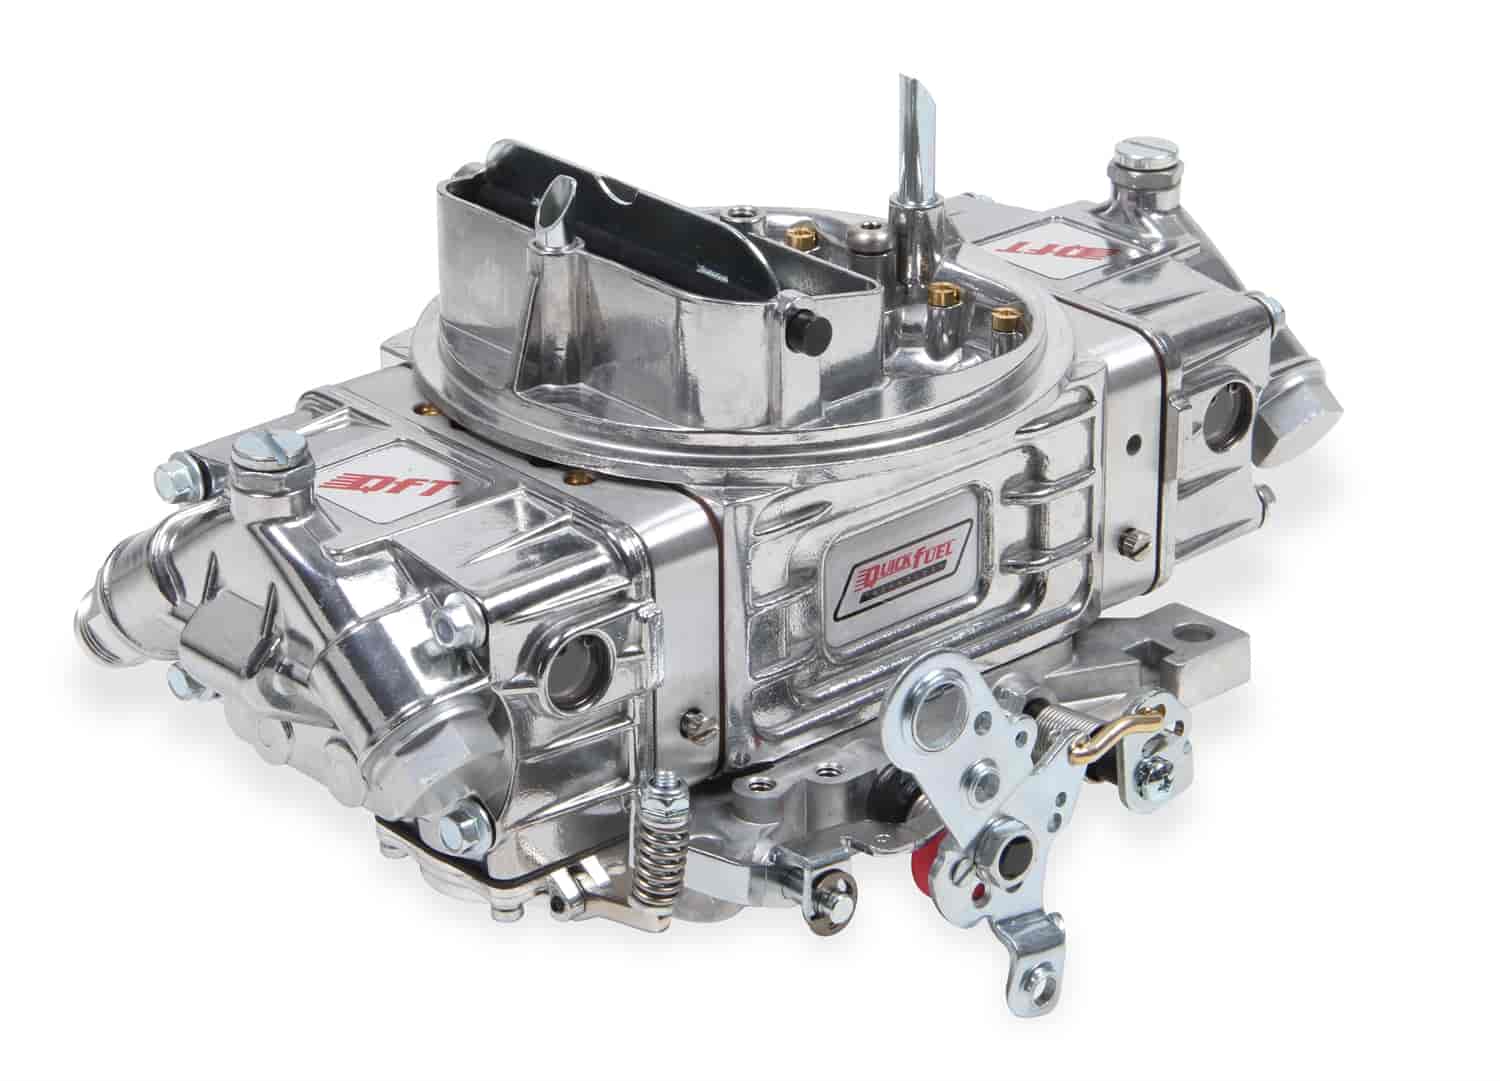 850 CFM 4-bbl SSR Carburetor For Manual Trans or Auto w/ Transbrake at Sea-Level Mechanical Secondary